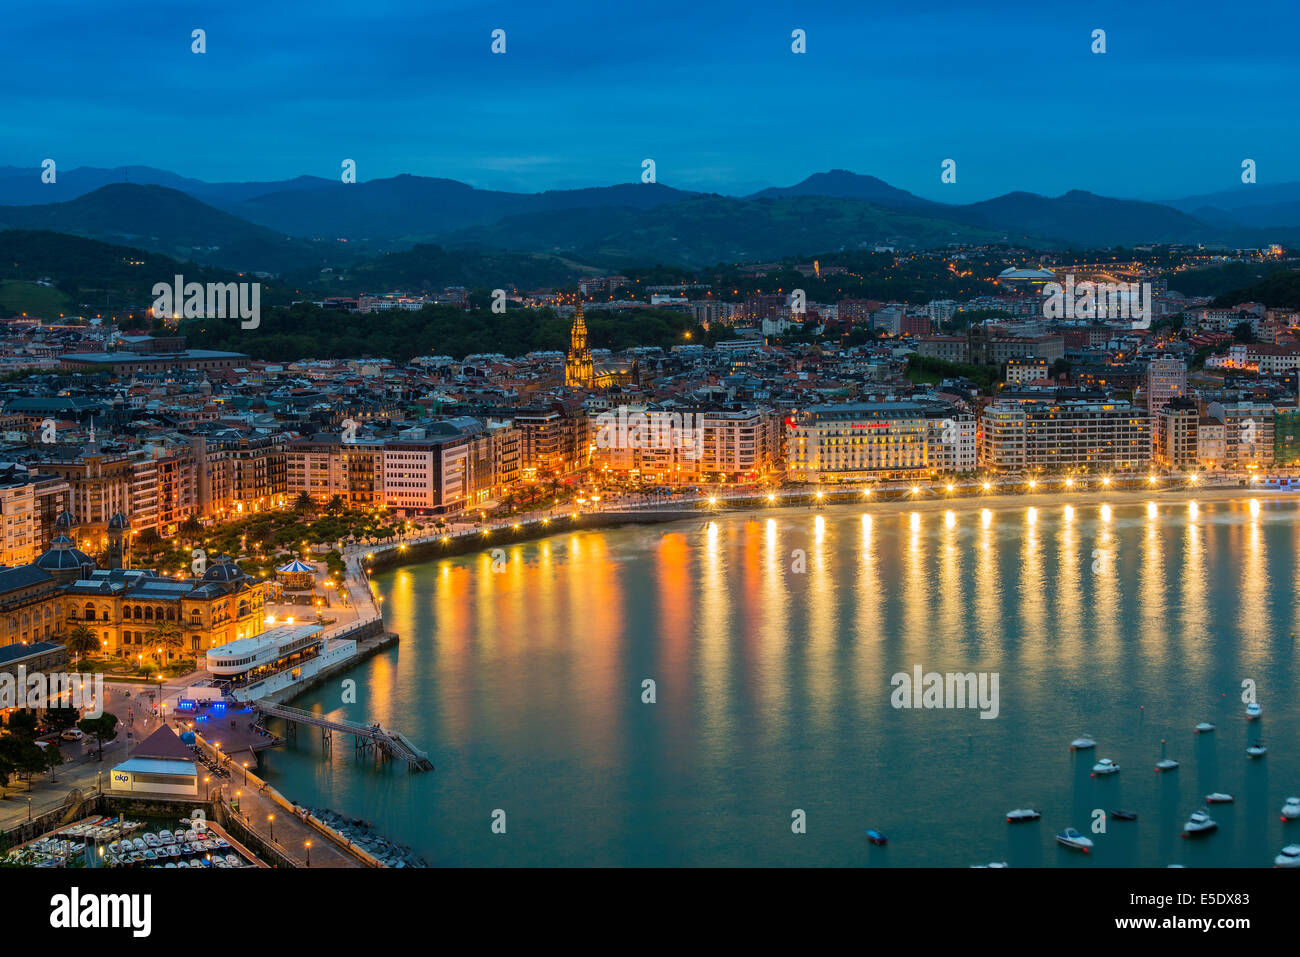 City skyline by night with Bahia de la Concha, Donostia San Sebastian, Gipuzkoa, Basque Country, Spain Stock Photo